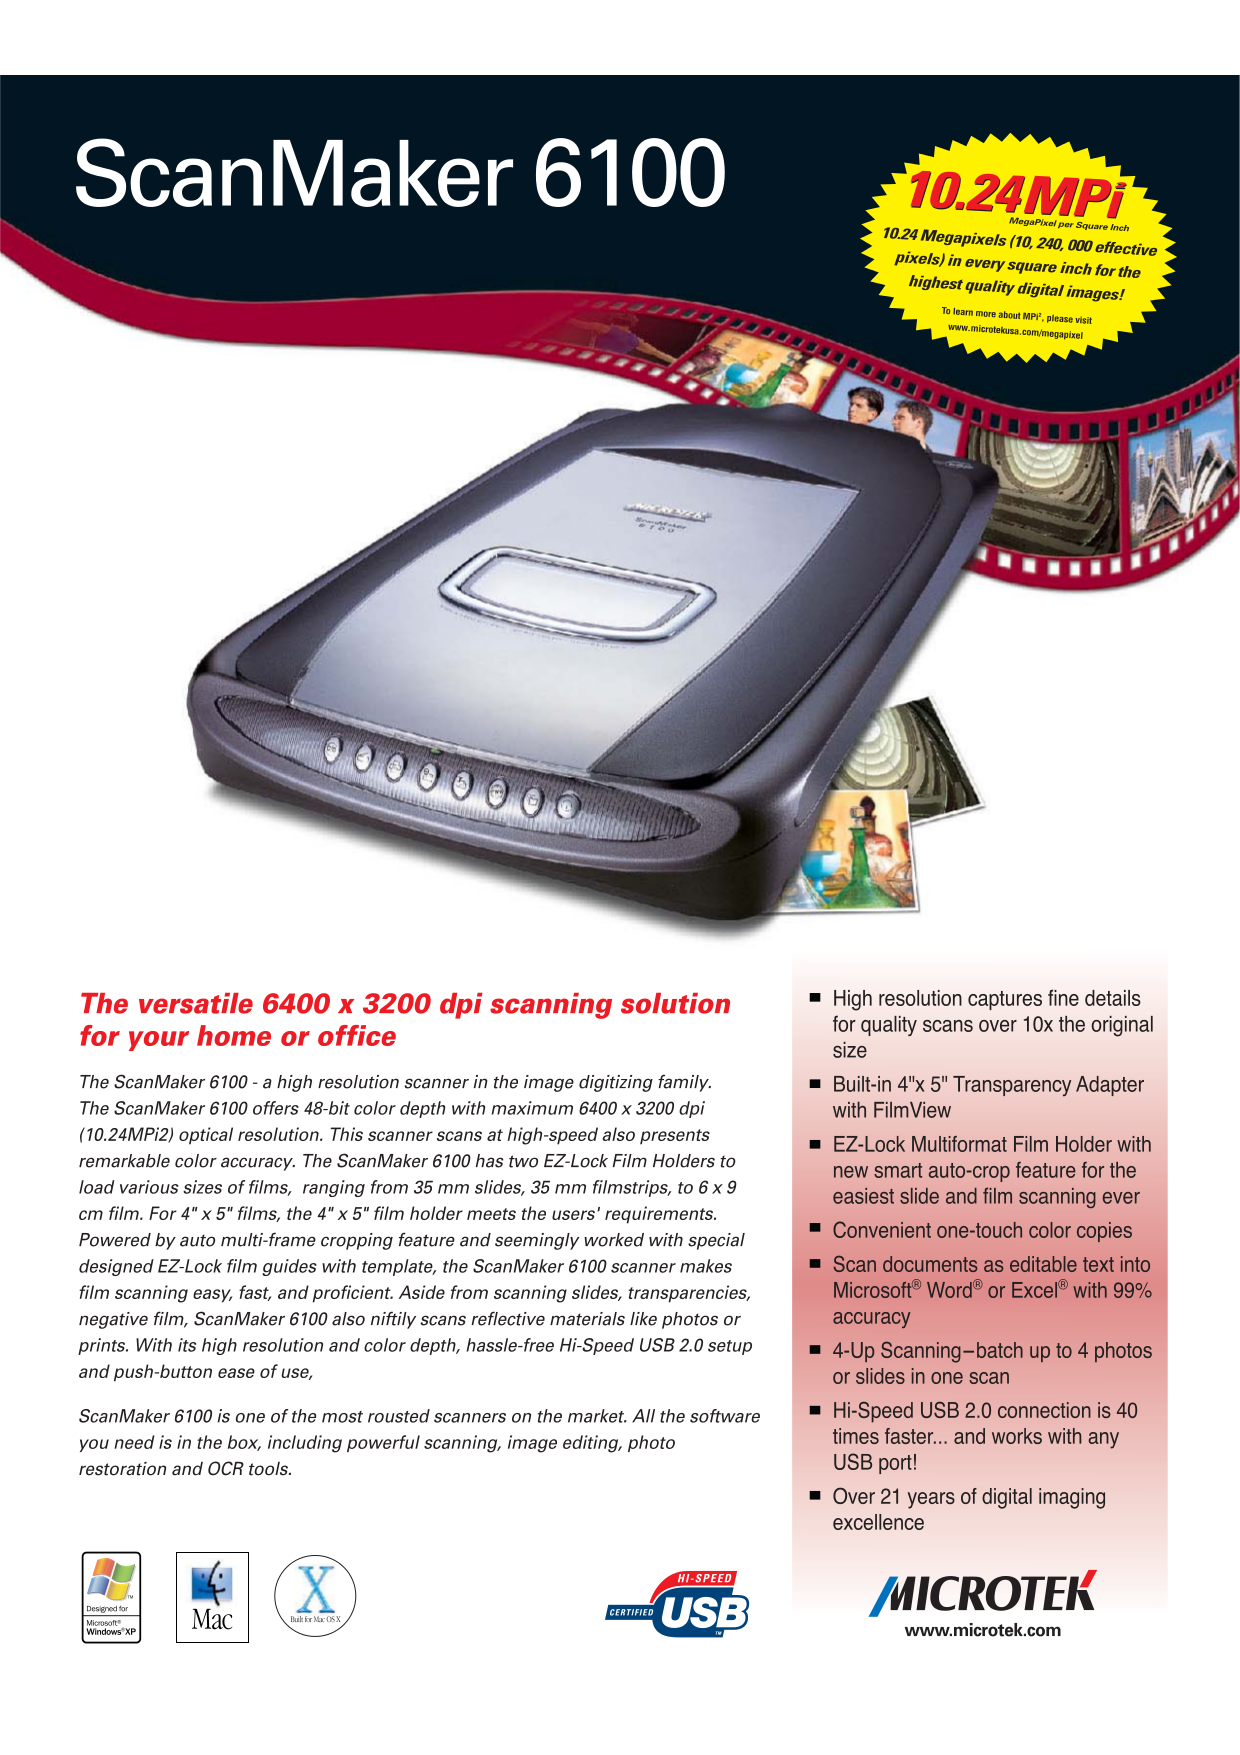 microtek scanmaker i2400 driver for osx